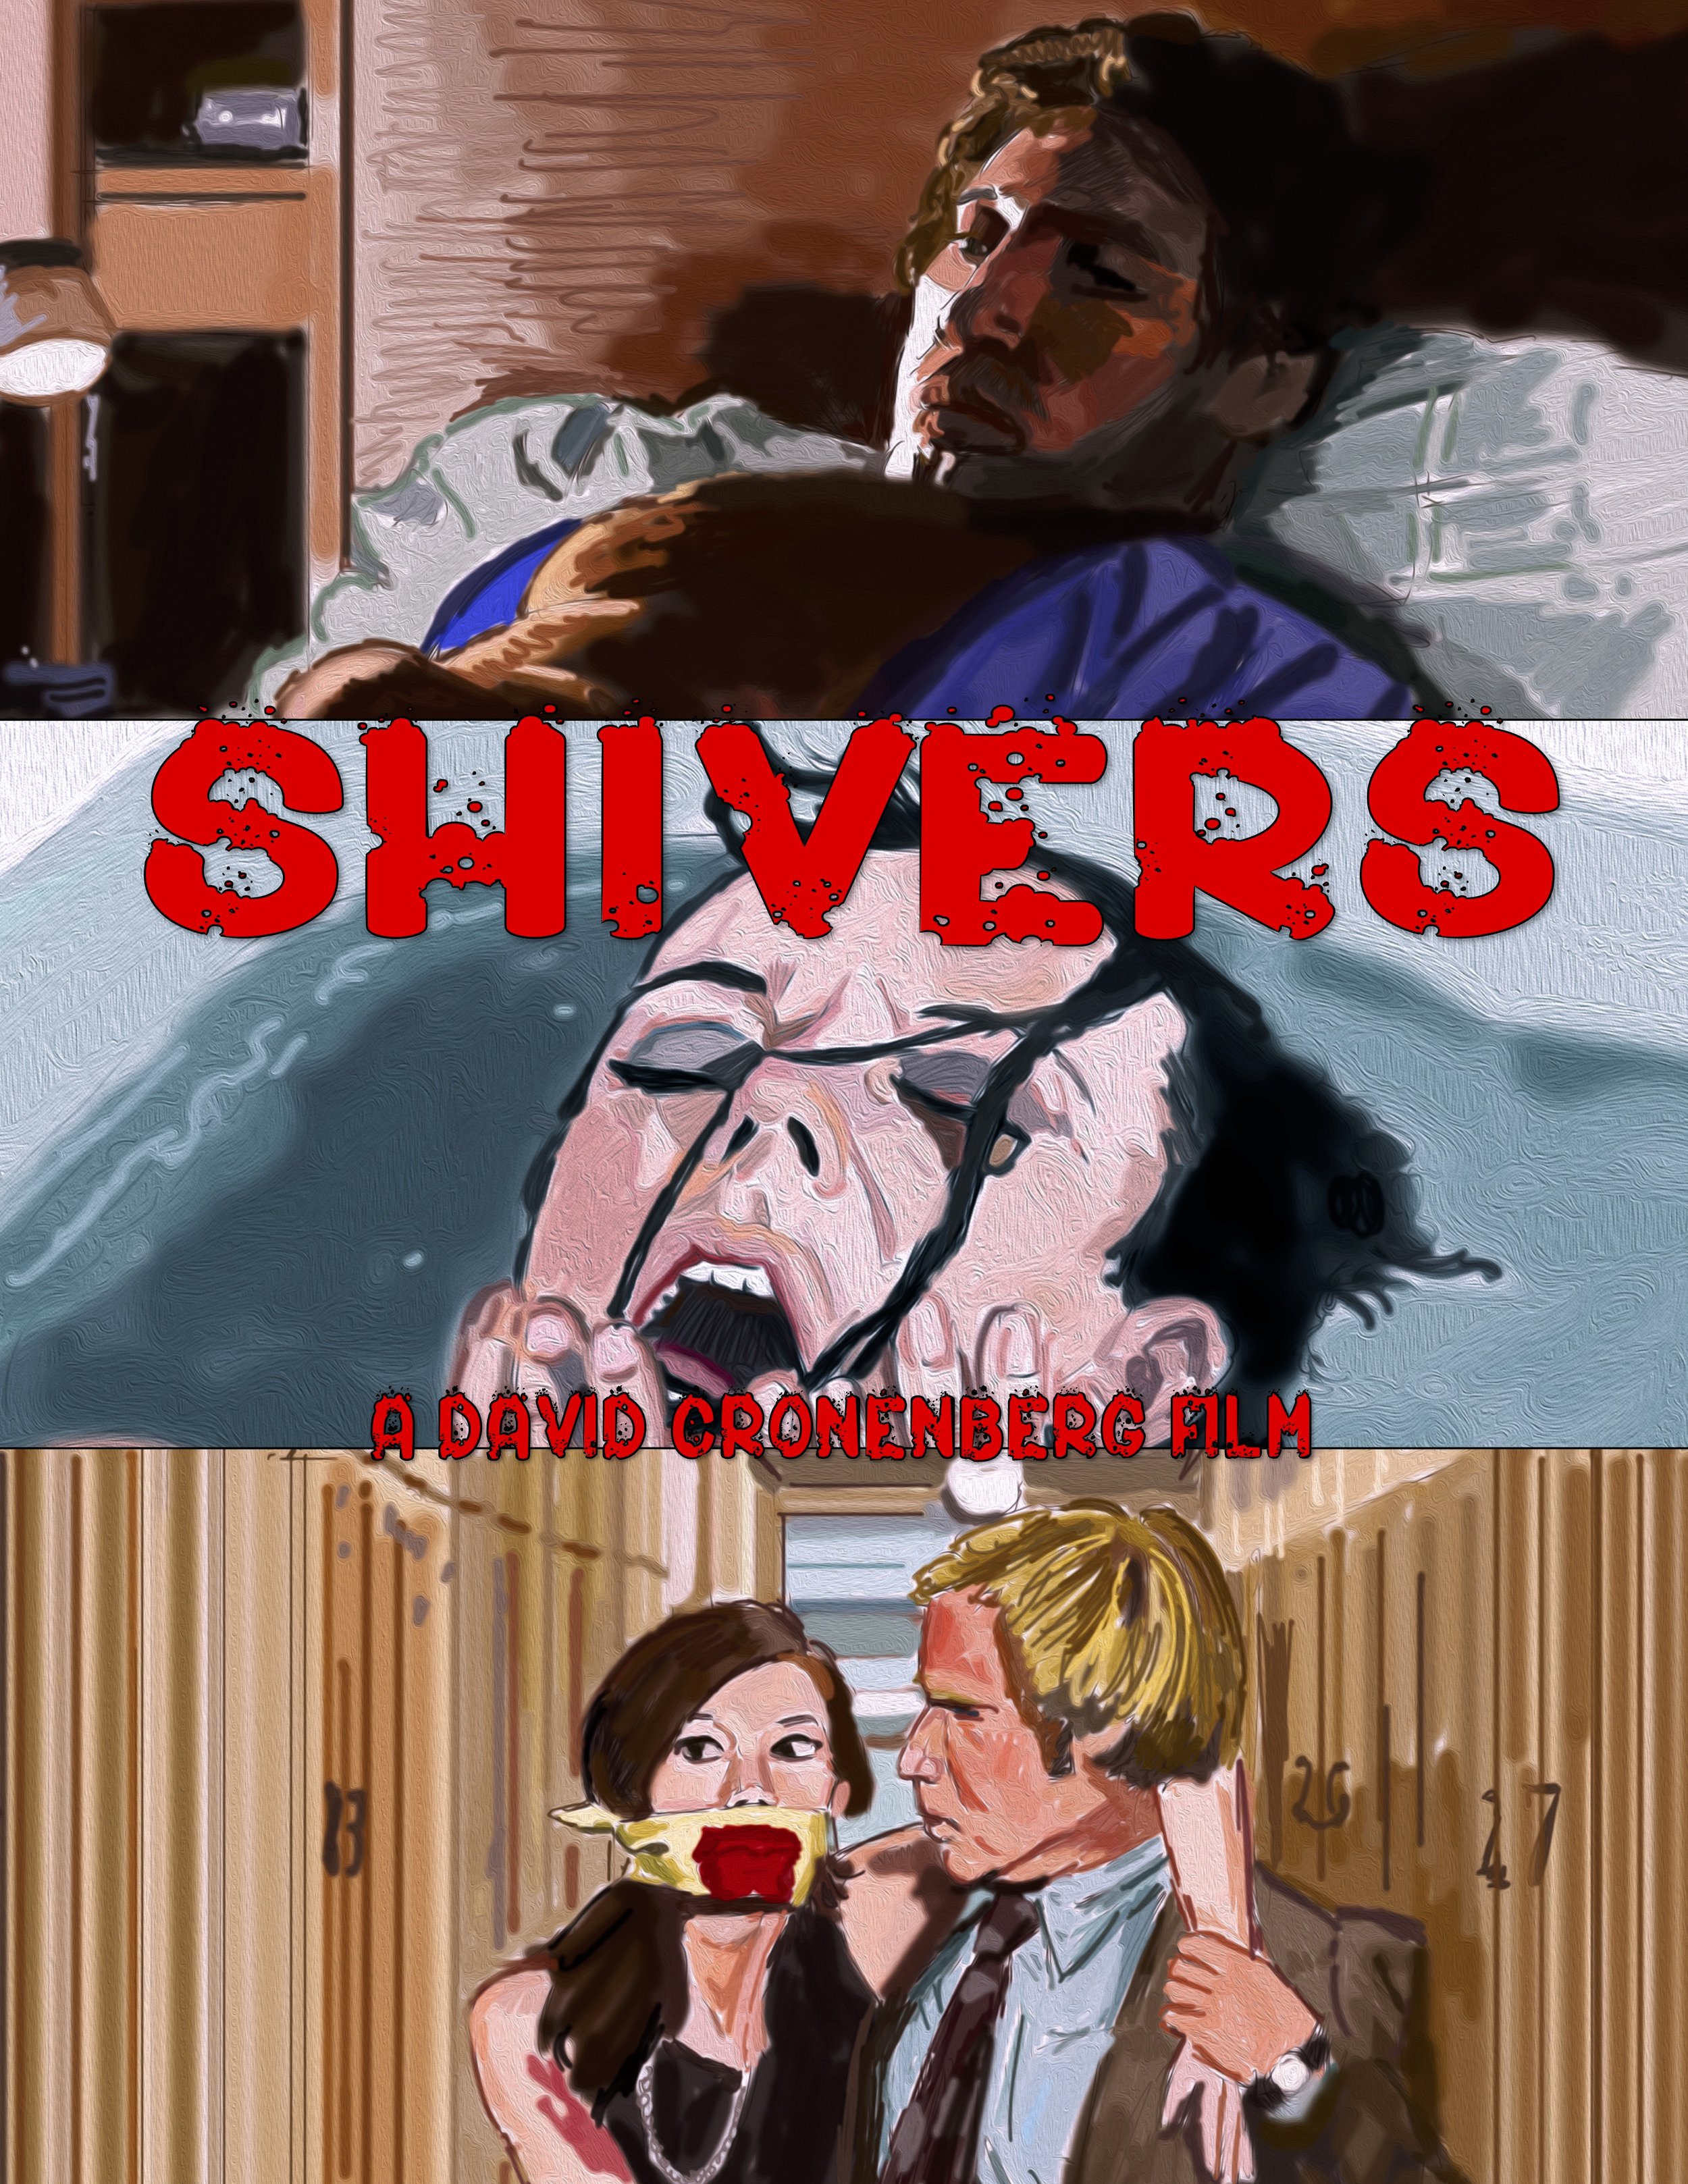 Shivers (1975)